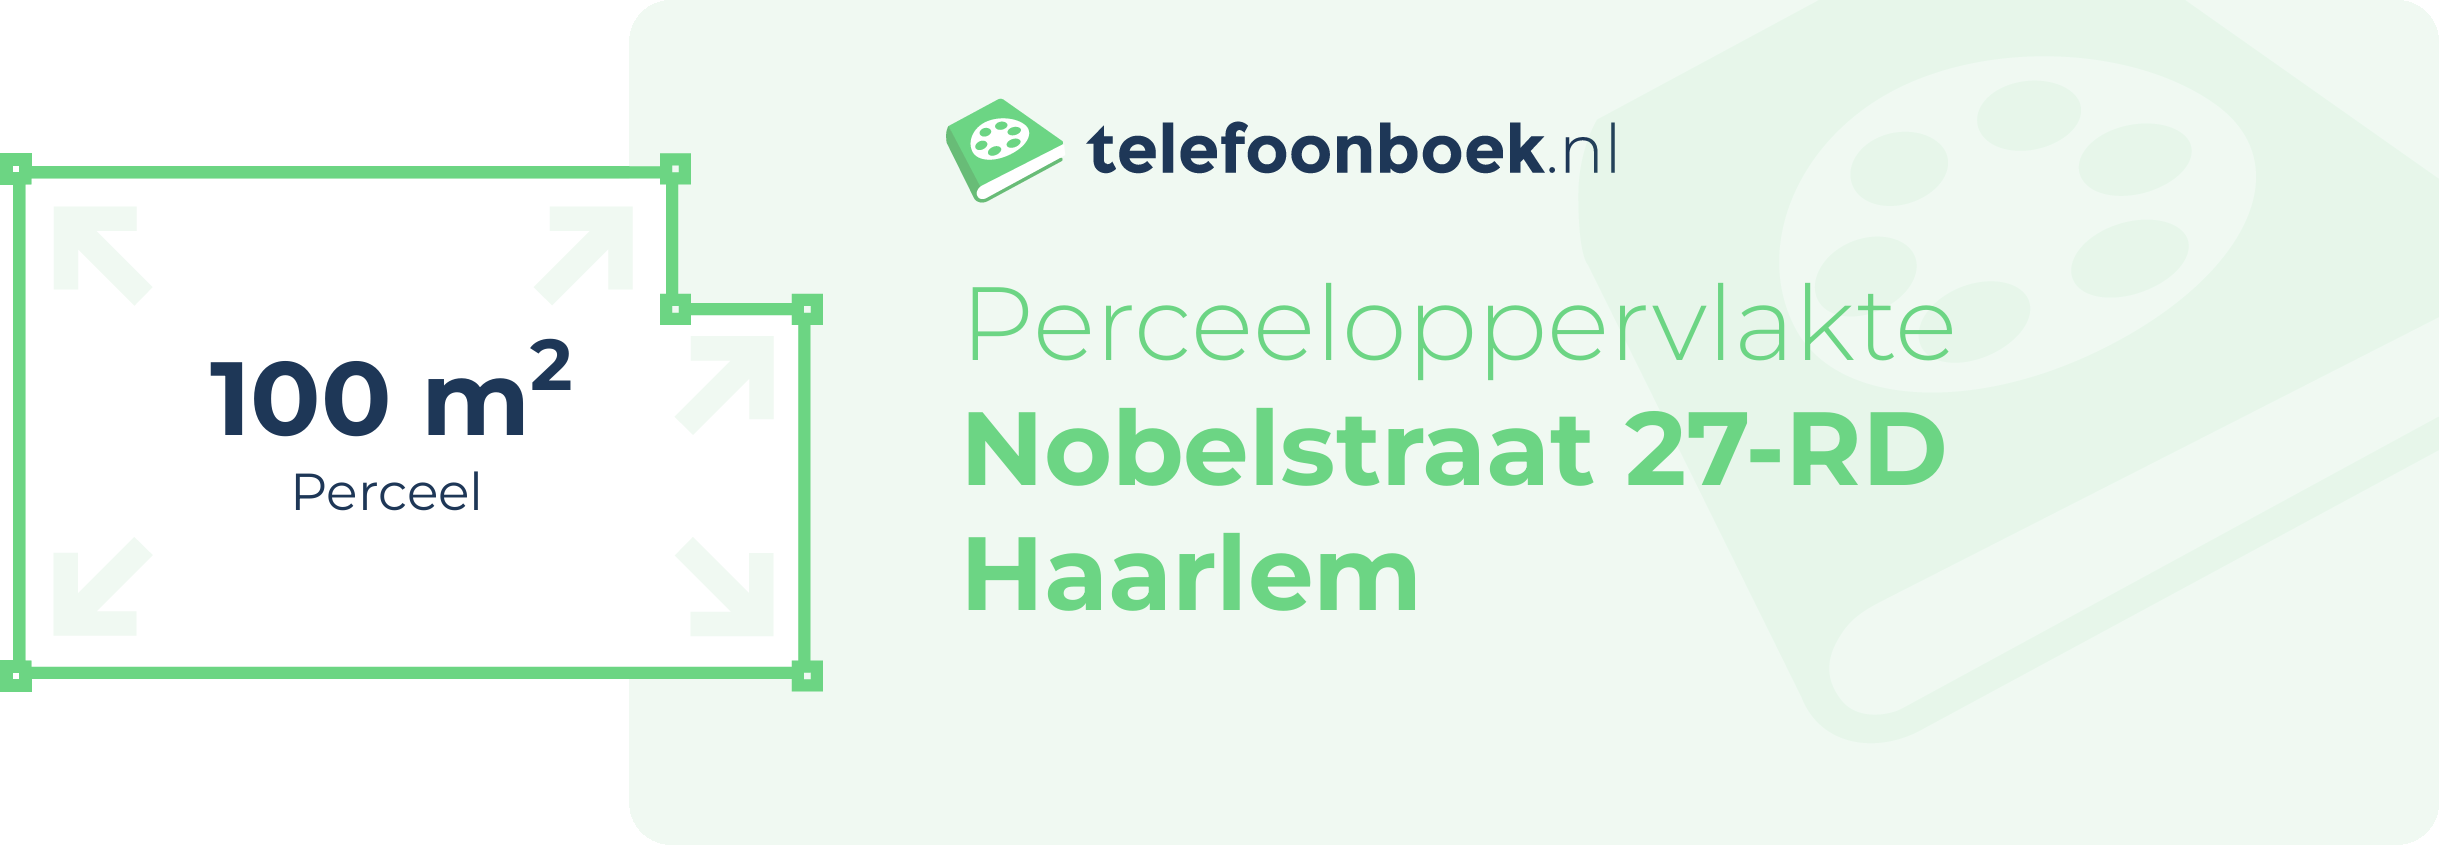 Perceeloppervlakte Nobelstraat 27-RD Haarlem